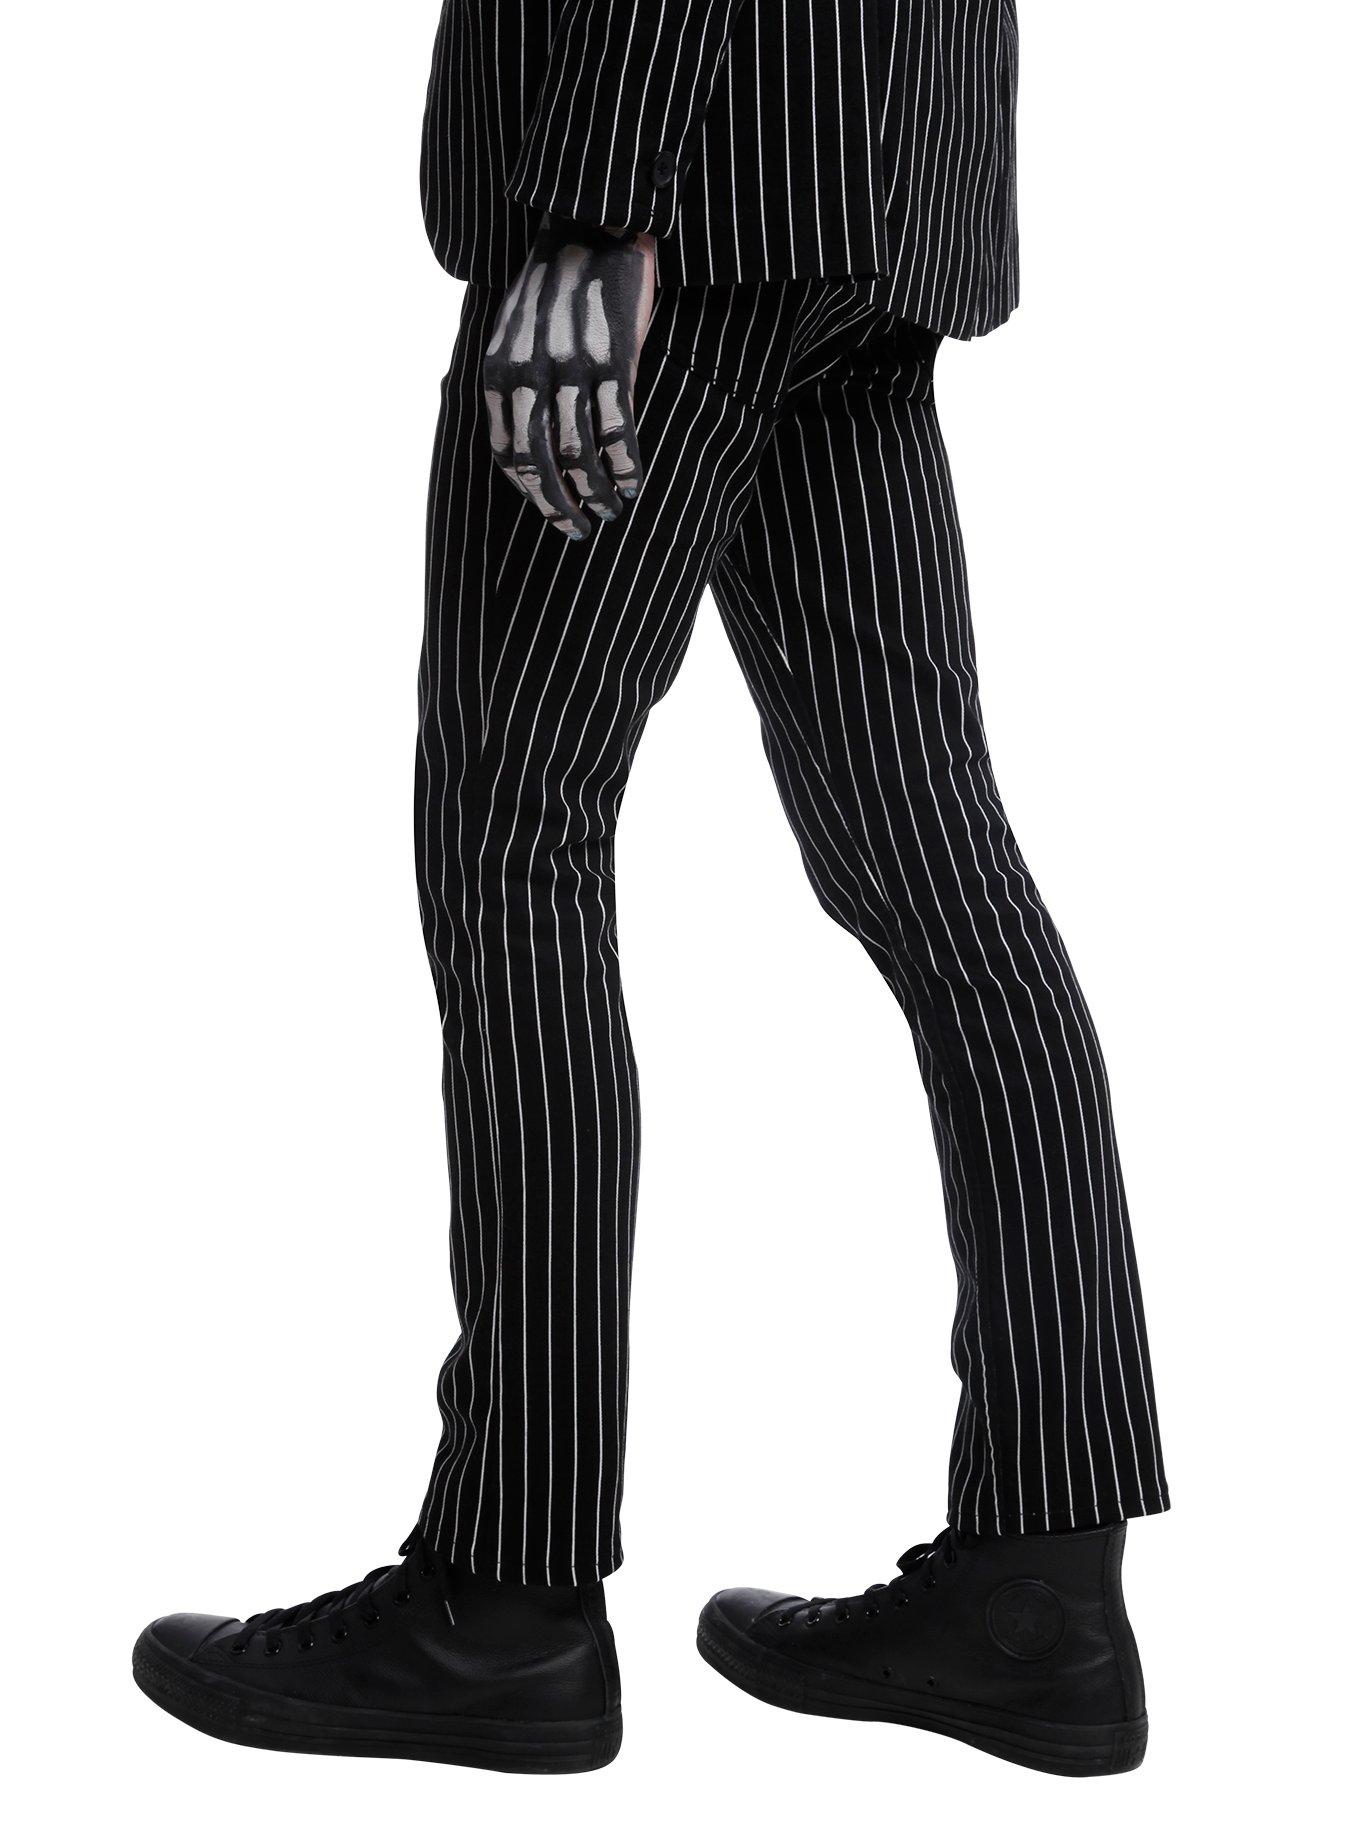 RUDE Black & White Pinstripe Pants, , alternate